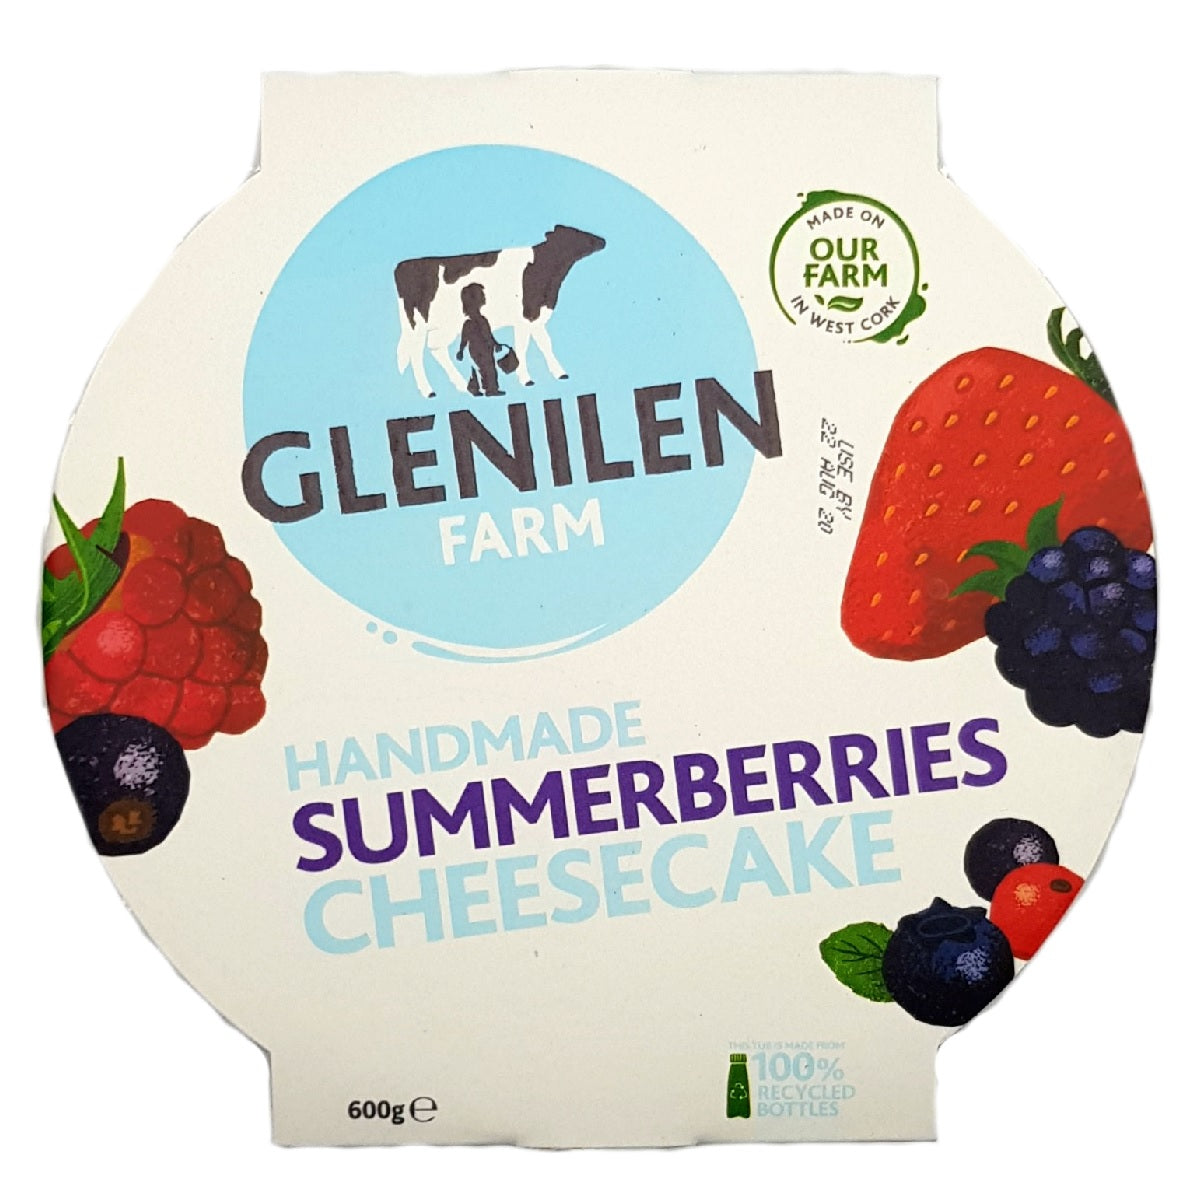 Glenilen Farm Handmade Summerberries Cheesecake 600g